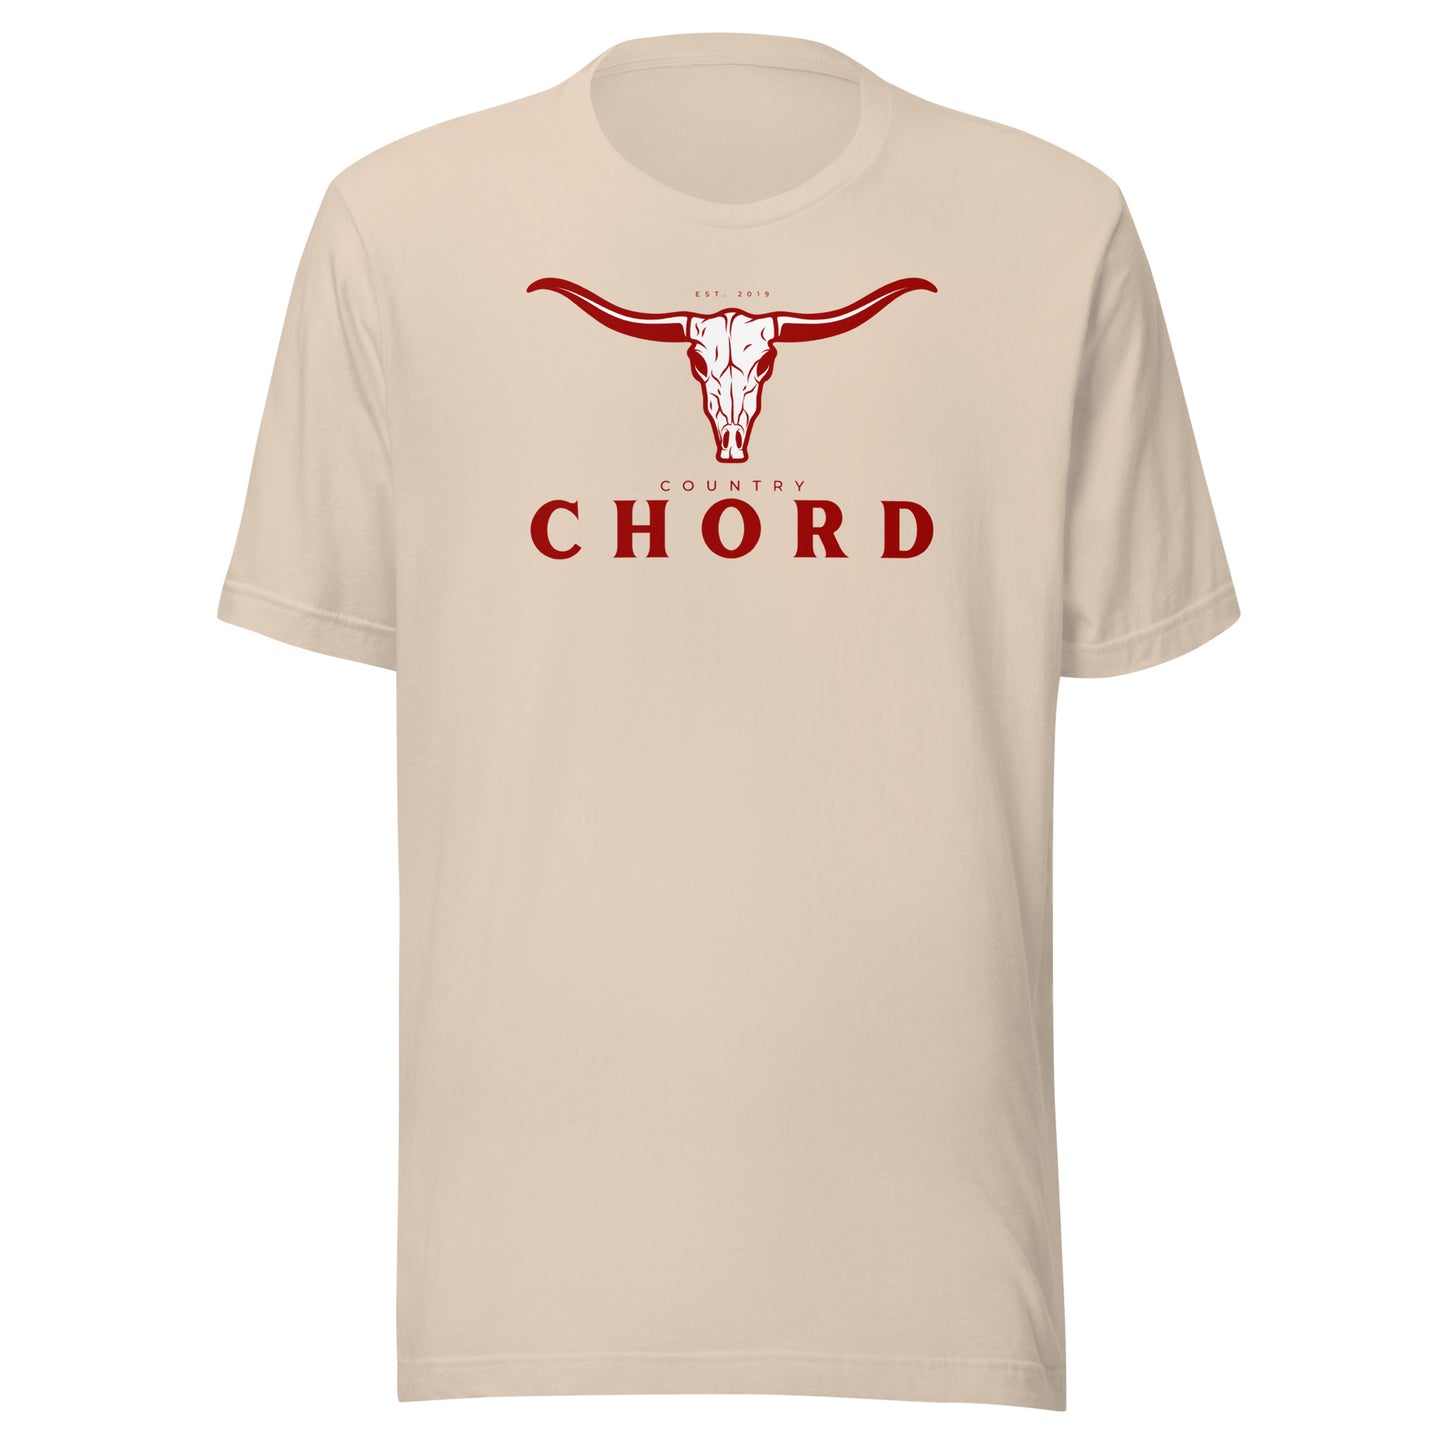 T-Shirt - Chord Skull